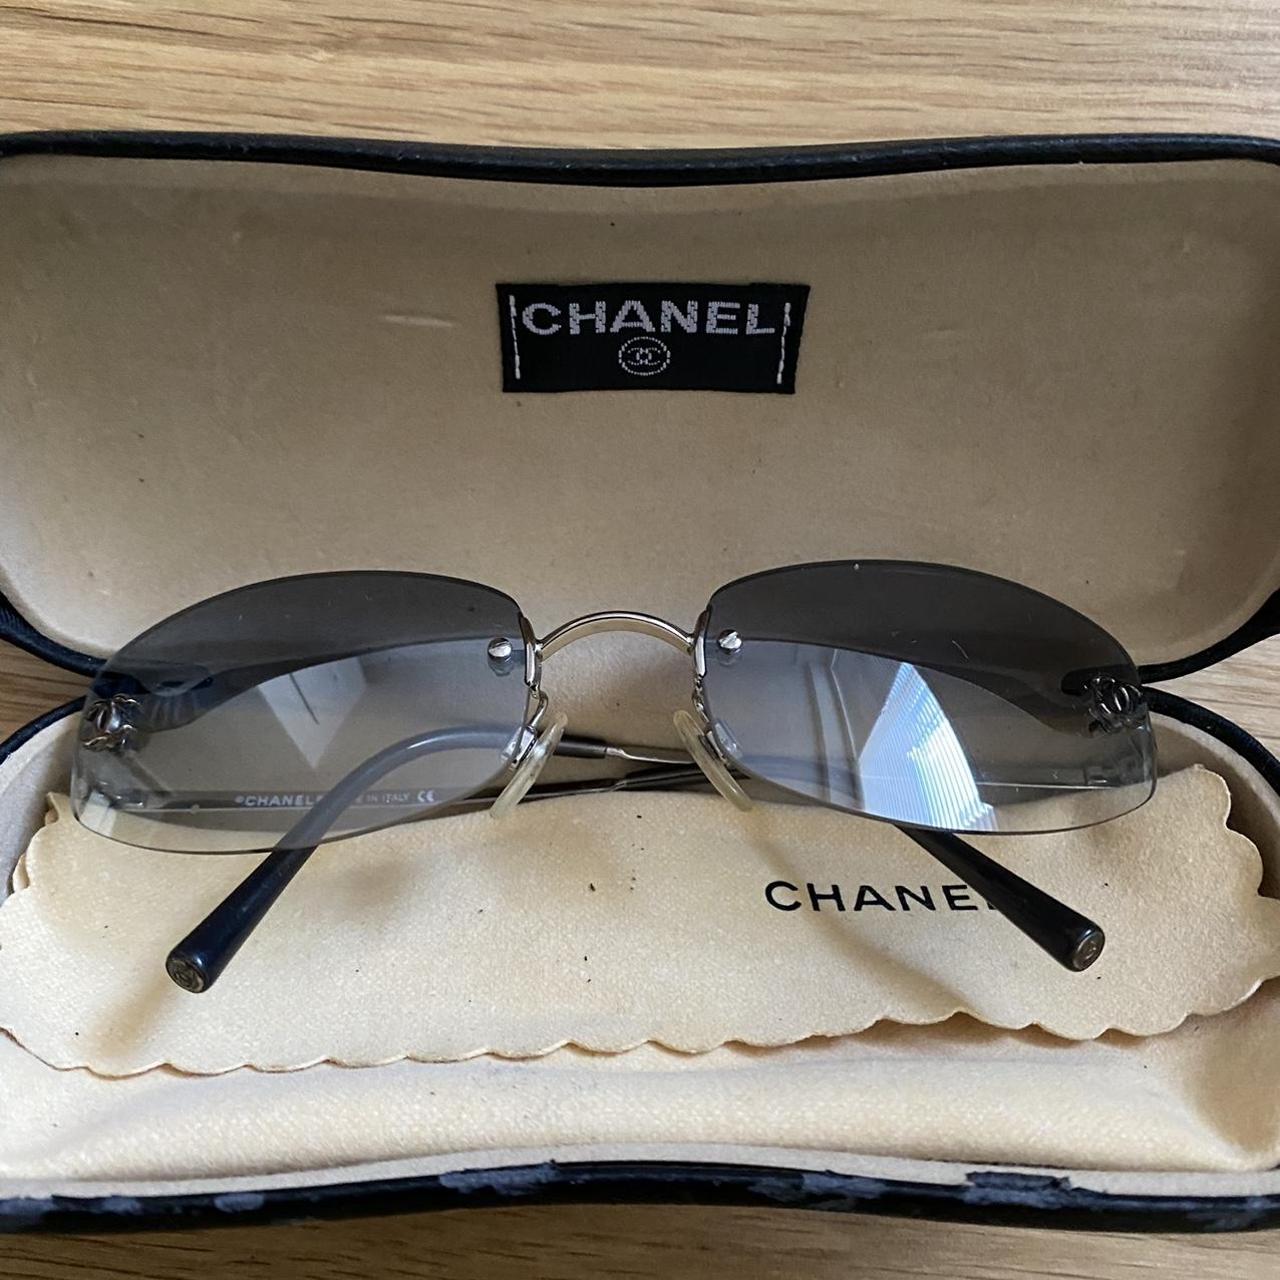 CHANEL 90s Sunglasses #chanel #vintagechanel #90sinspo - Depop